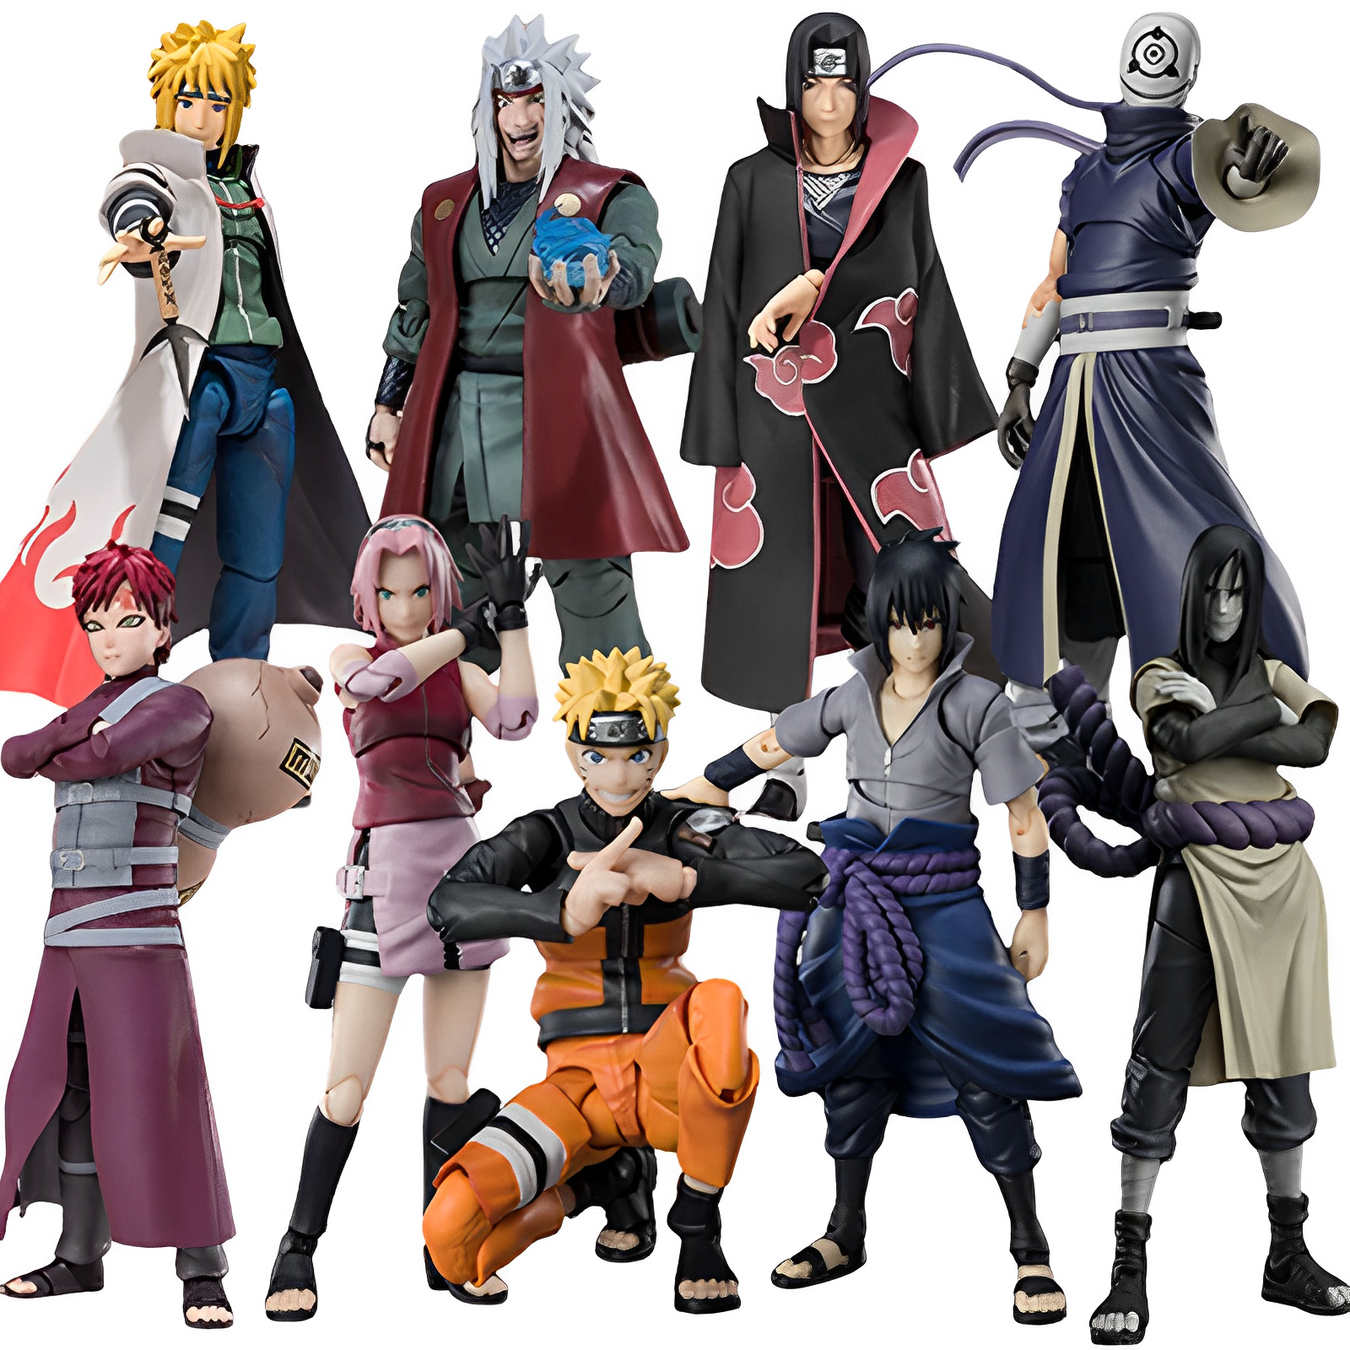 Naruto Shippuden Figures Statues